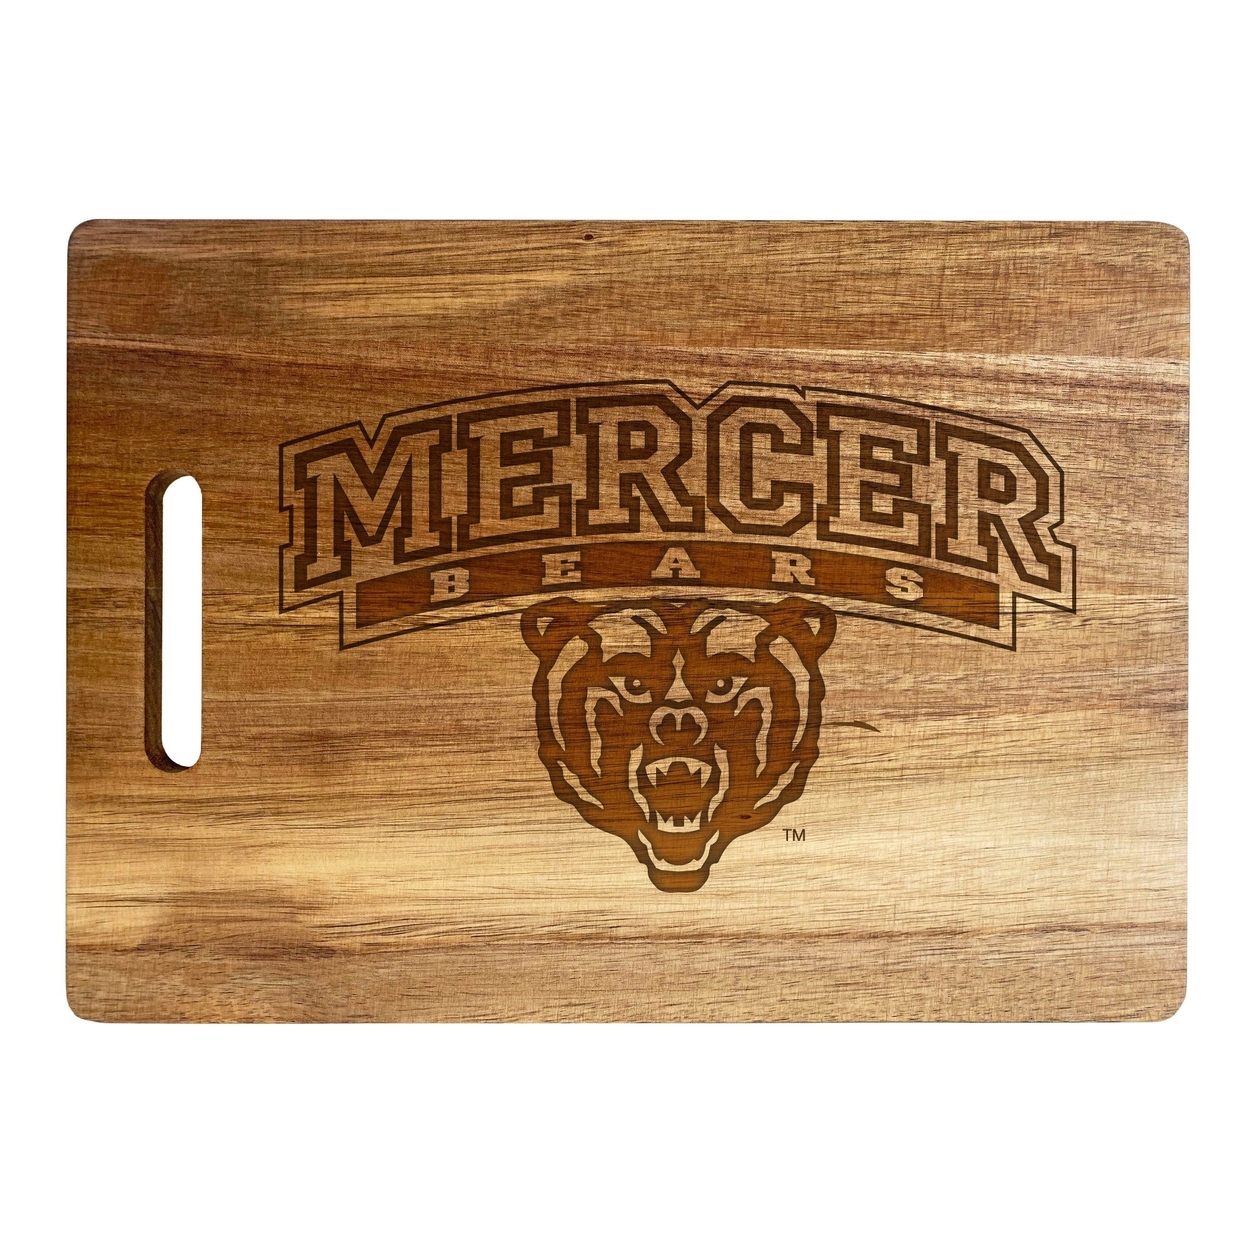 Mercer University Engraved Wooden Cutting Board 10 X 14 Acacia Wood - Large Engraving